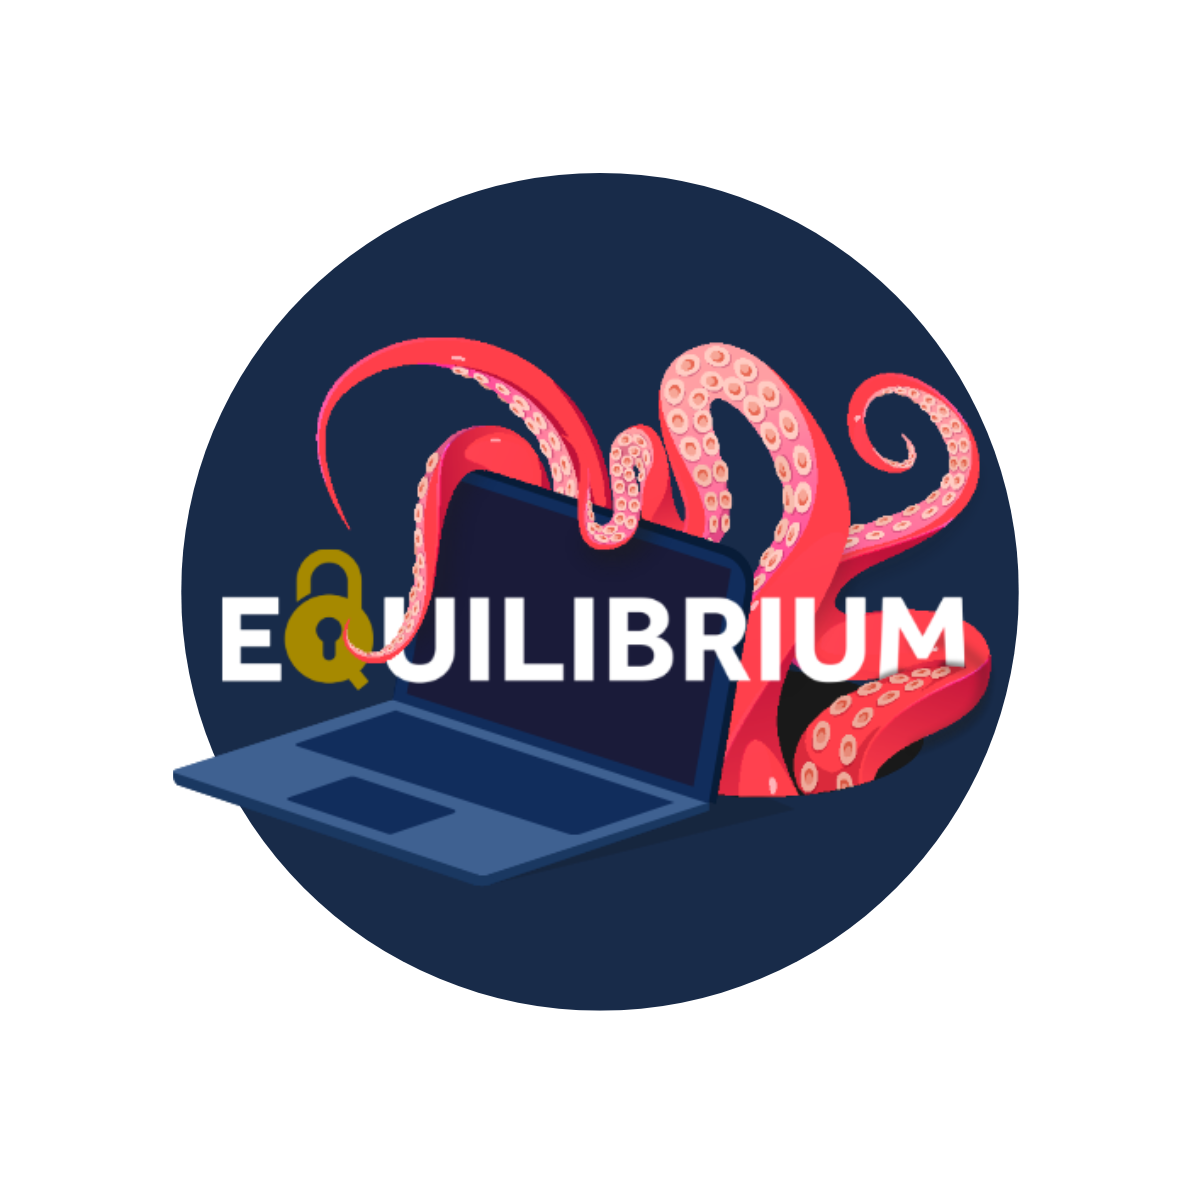 Equilibrium logo with navy circle behind the logo